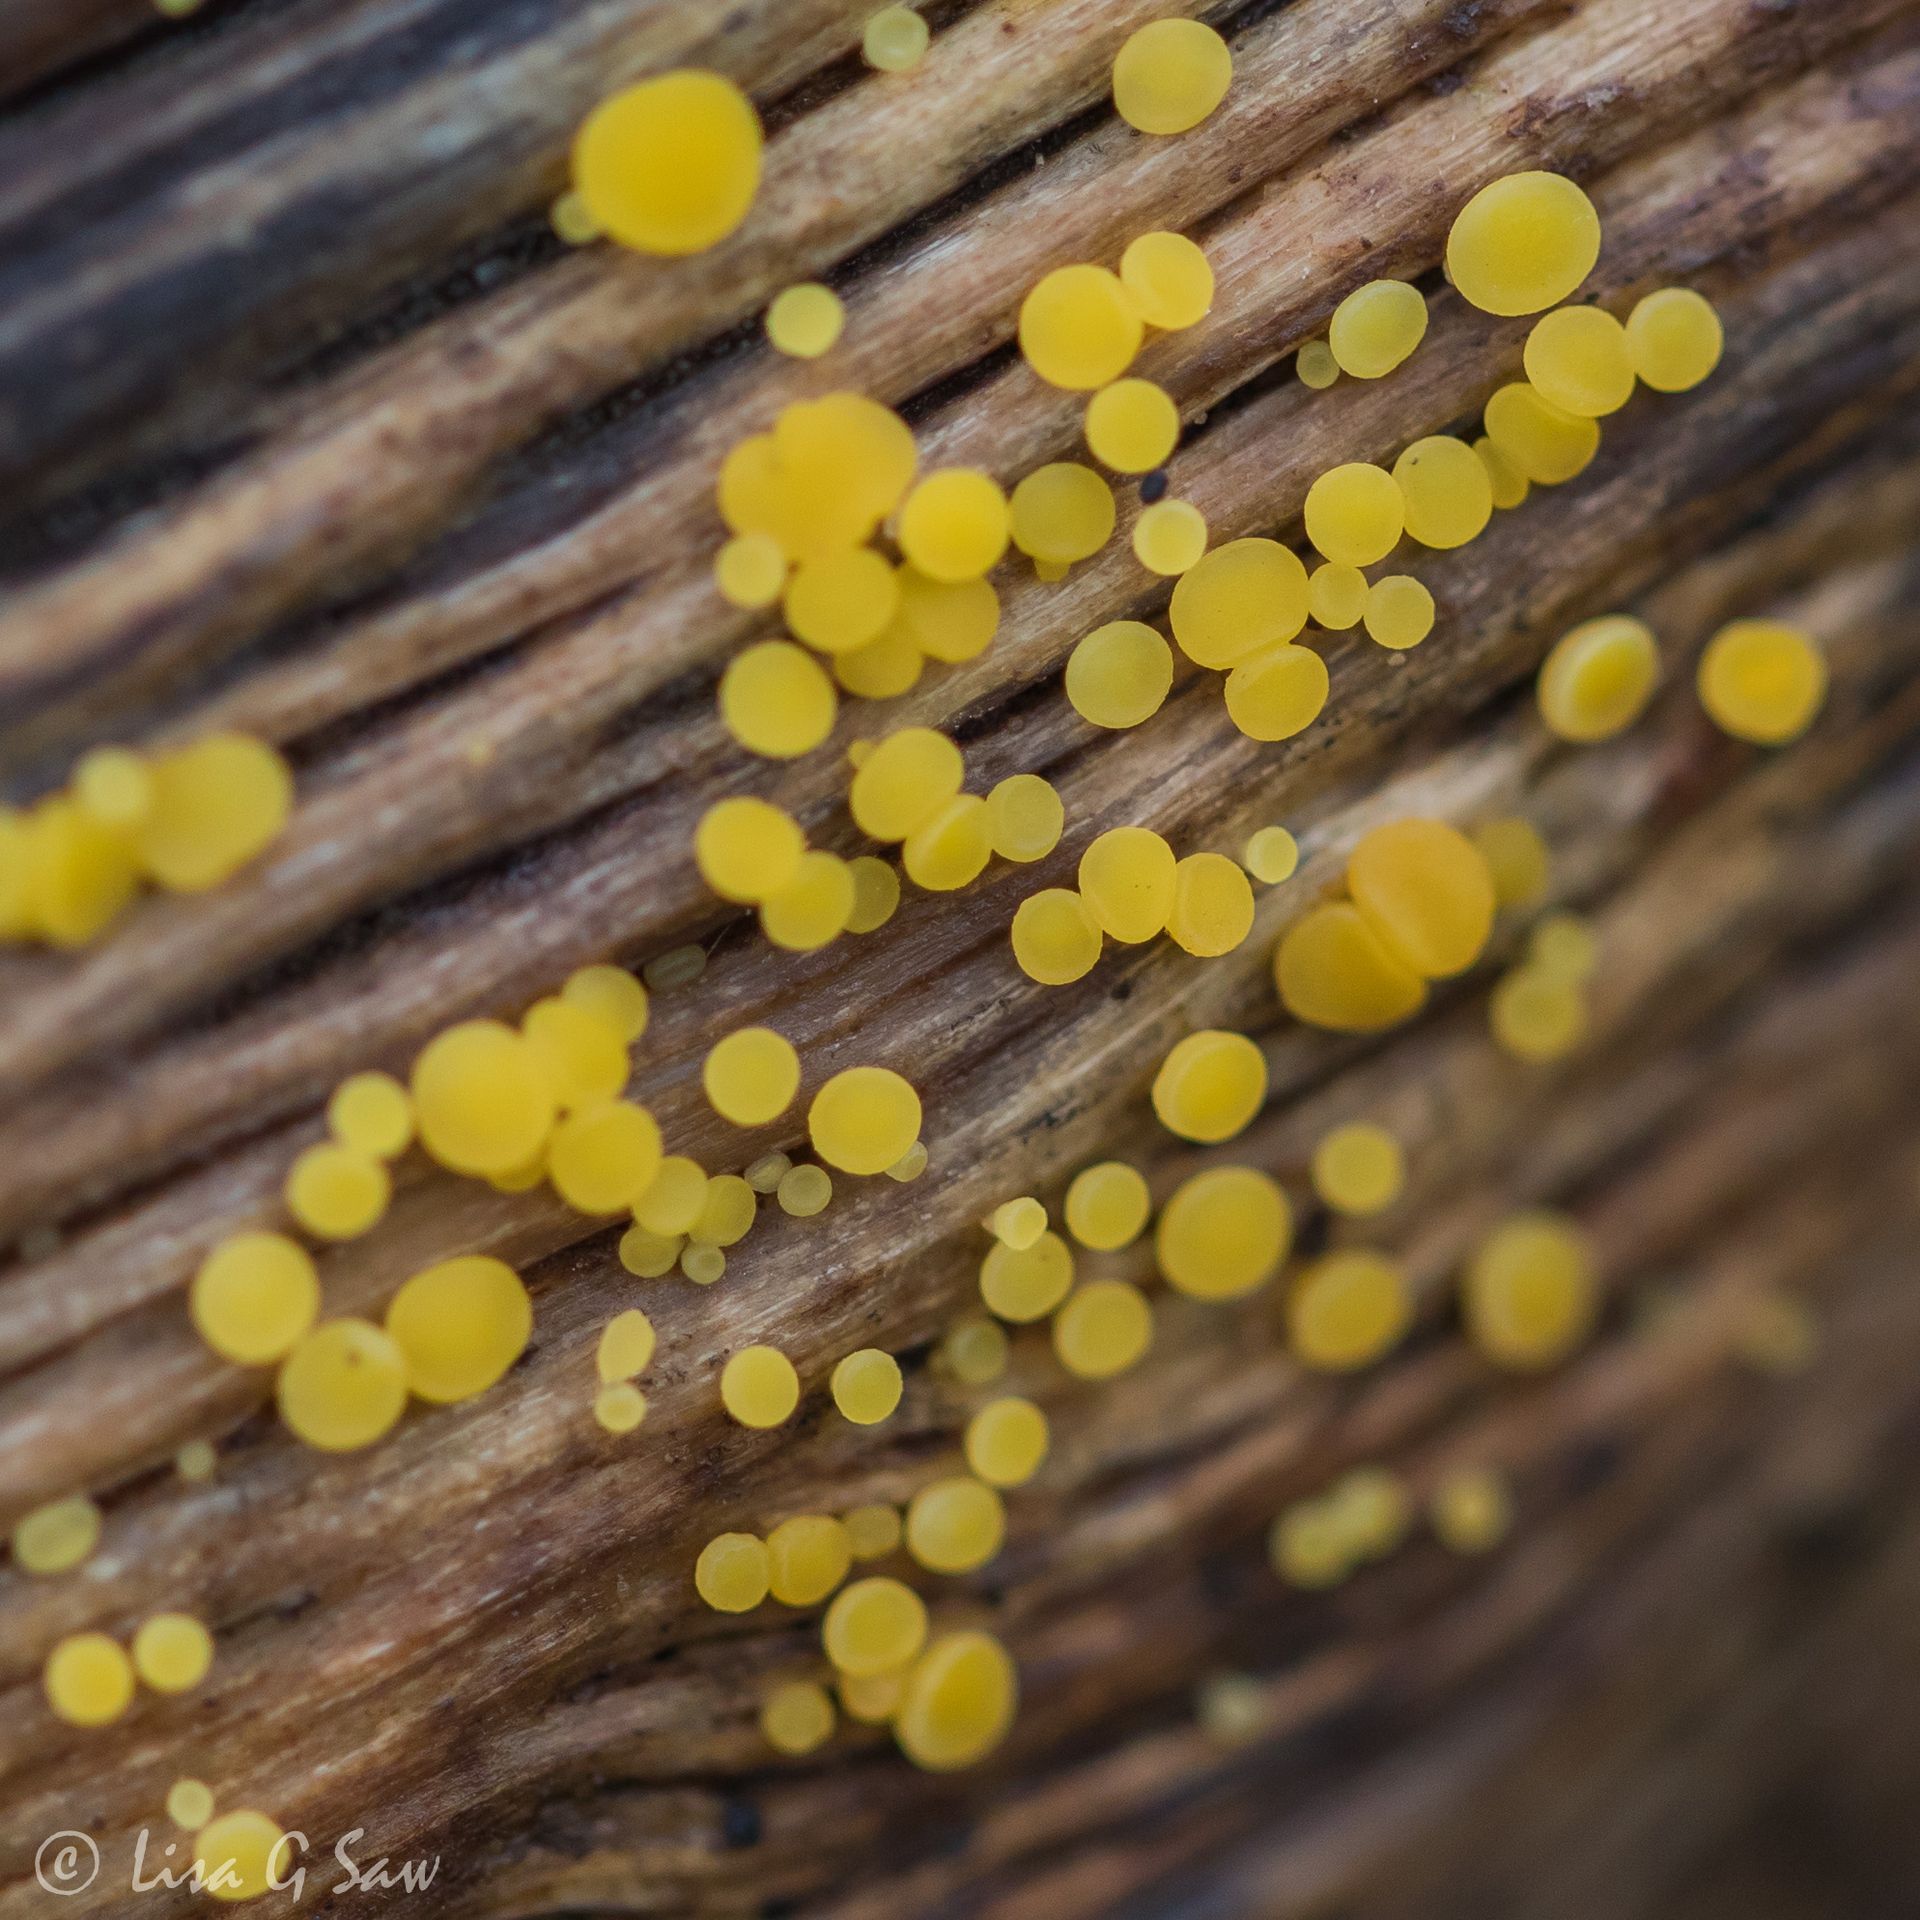 Lemon Disco fungus